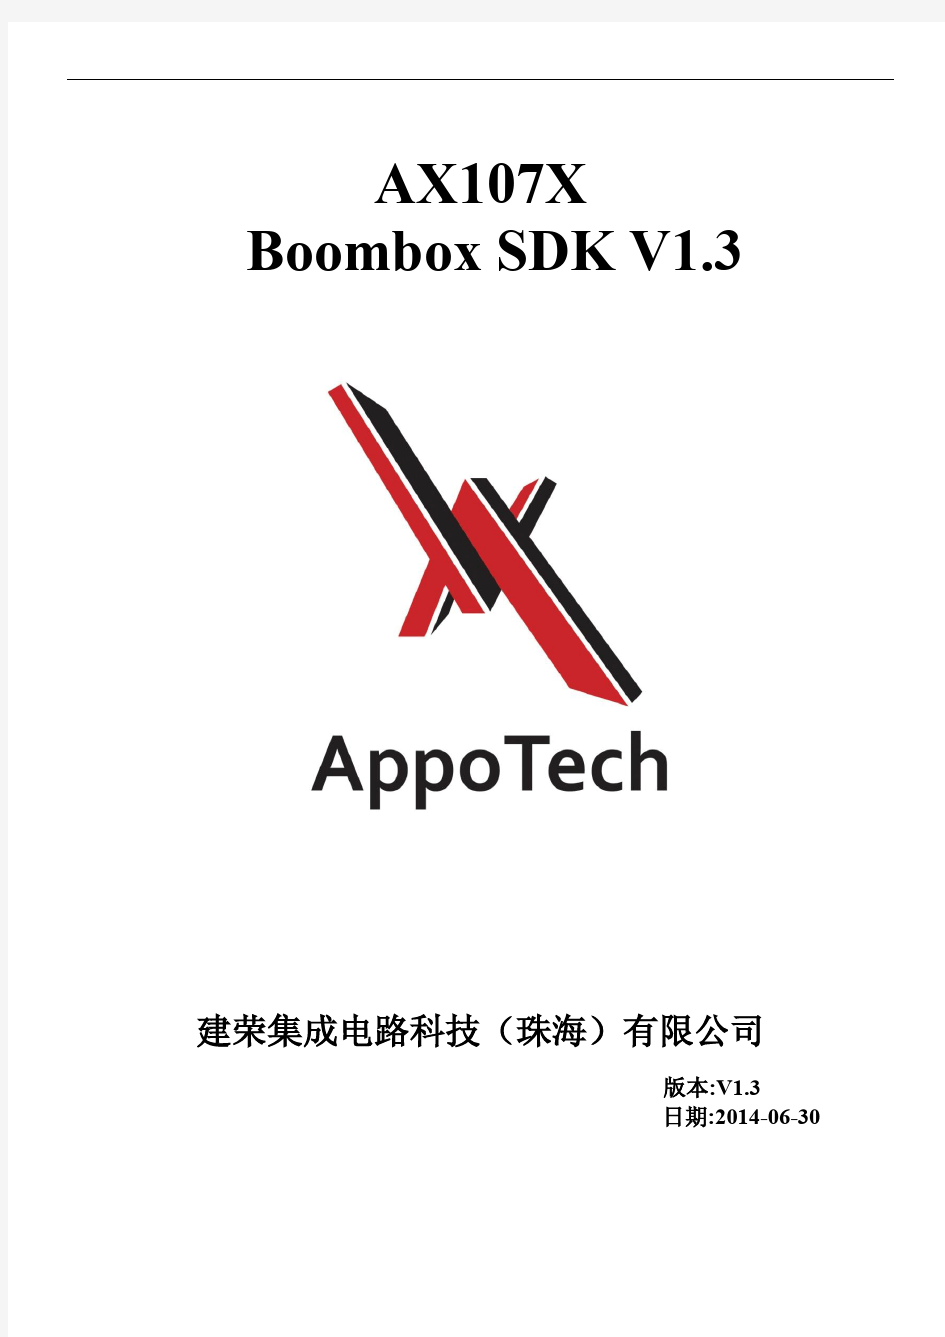 AX107X Boombox SDK V1.3